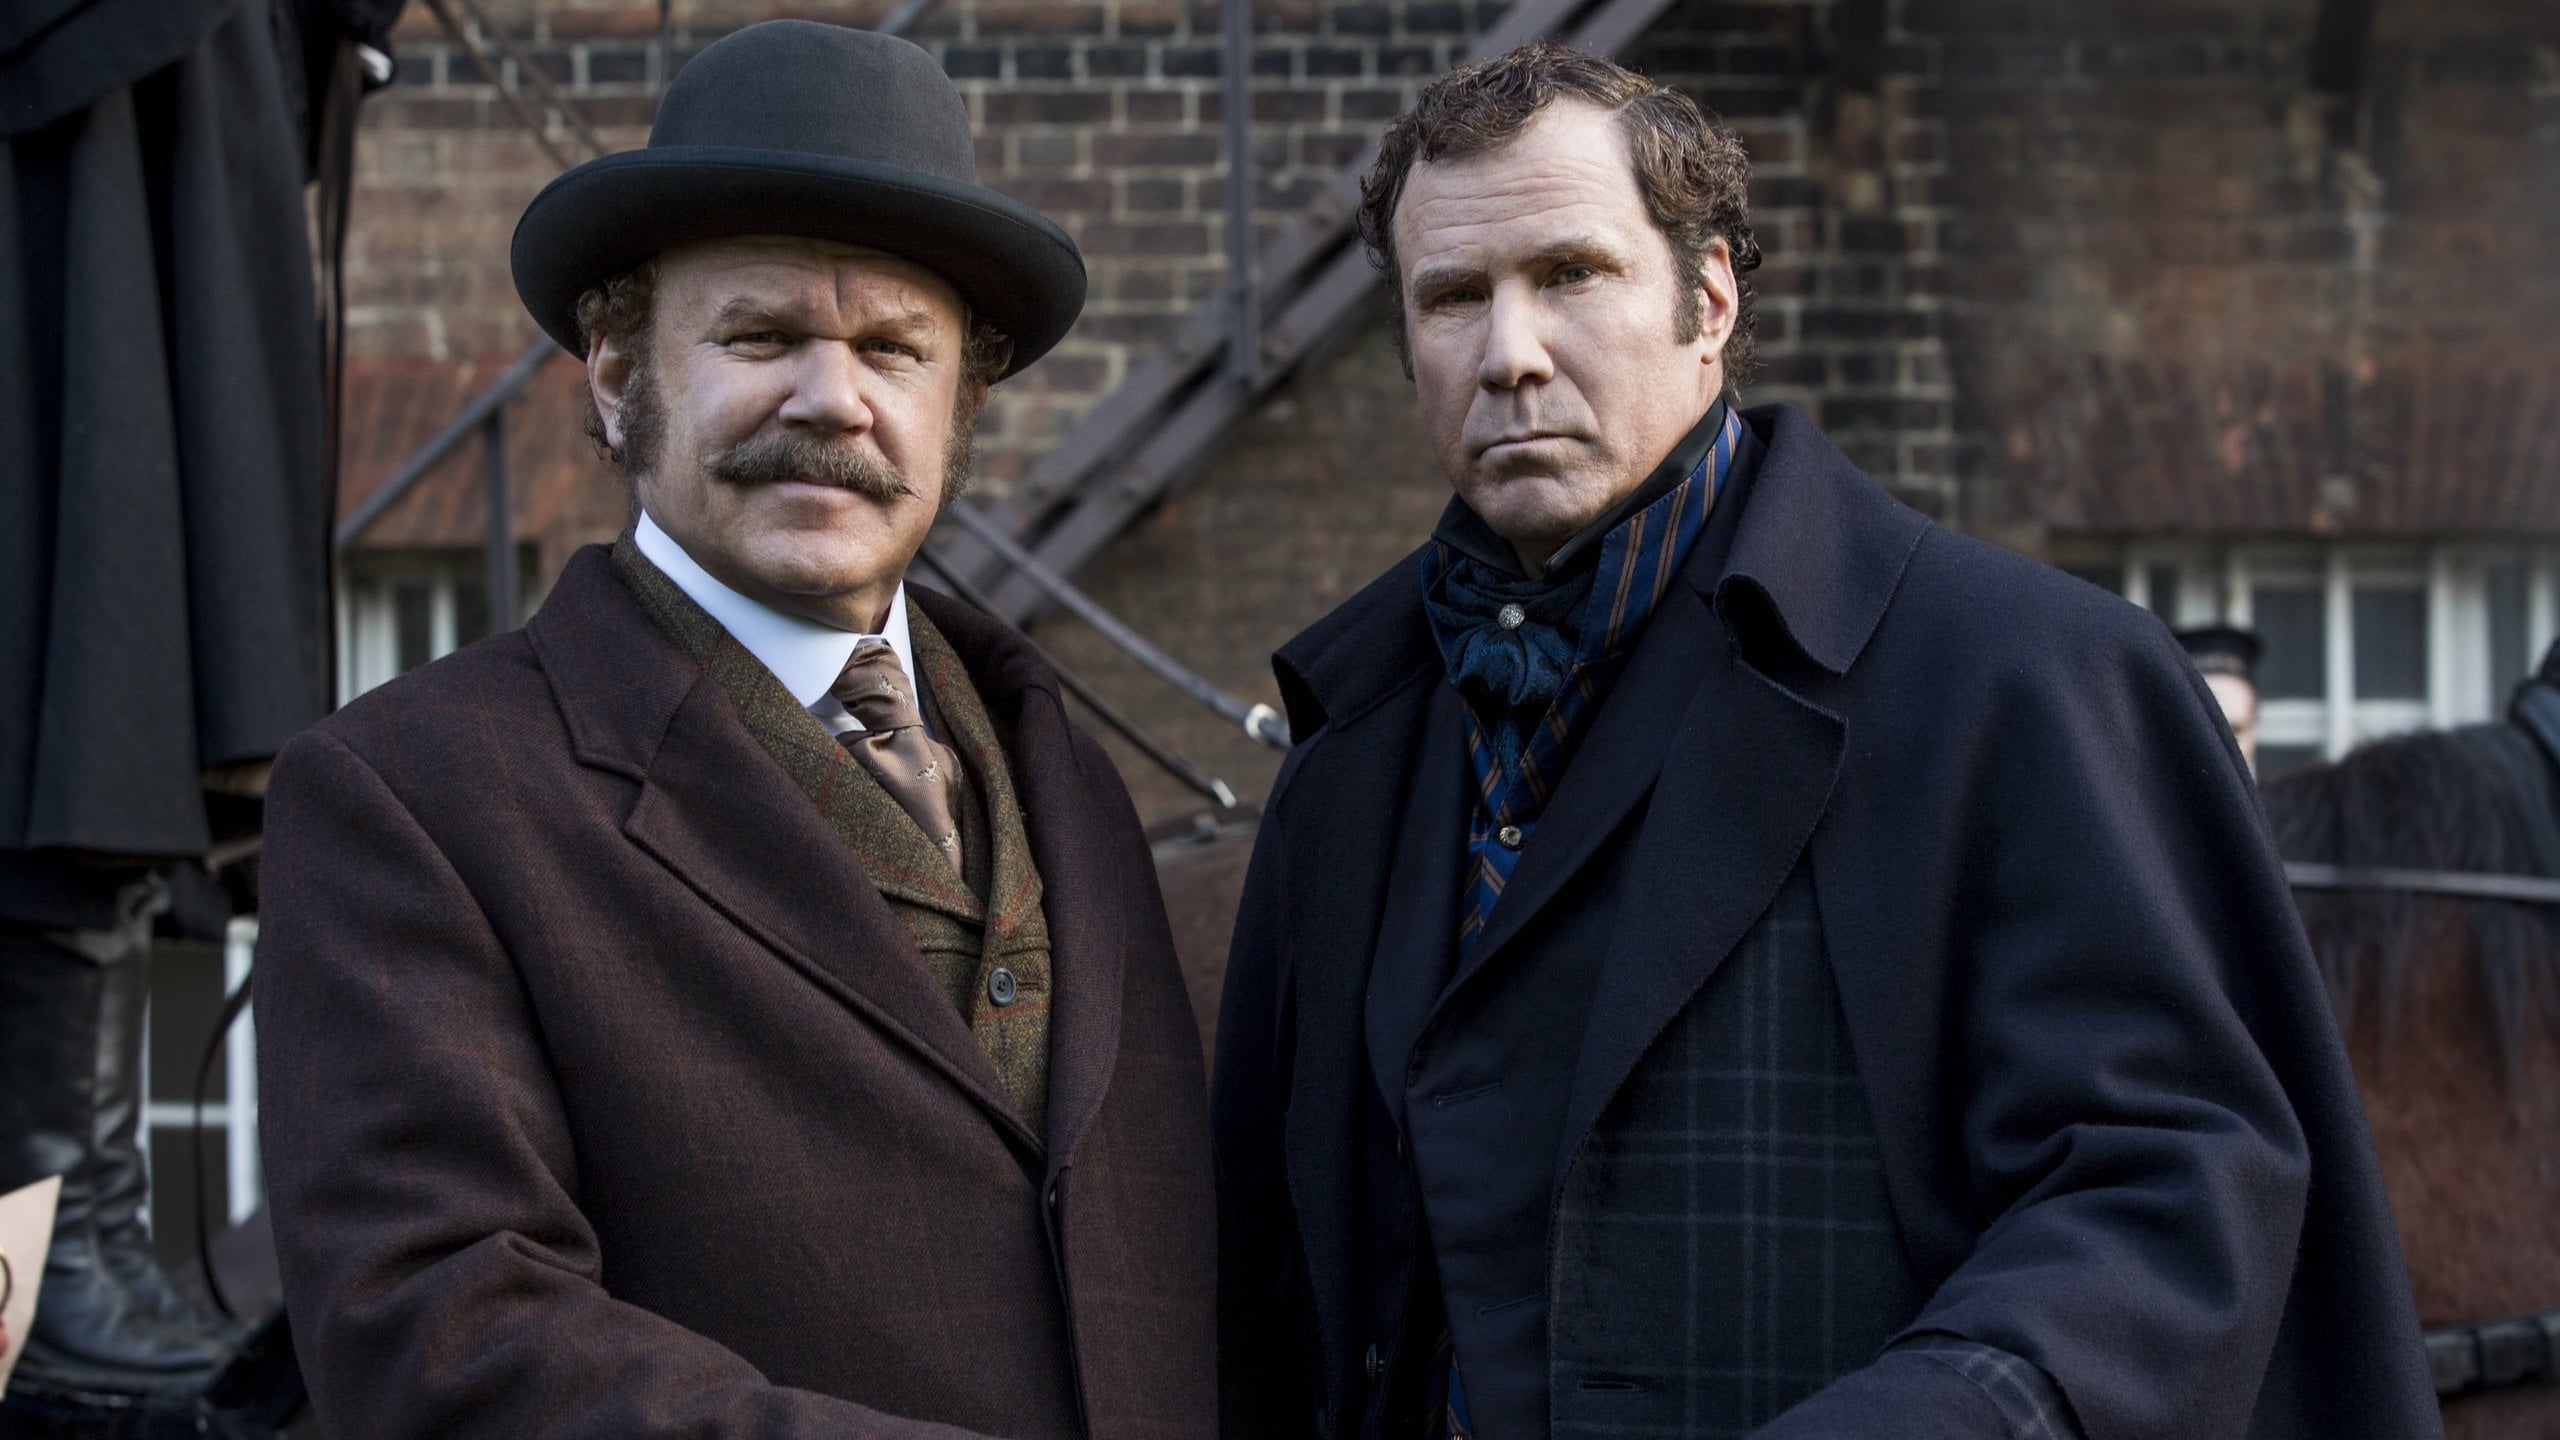 Holmes & Watson backdrop